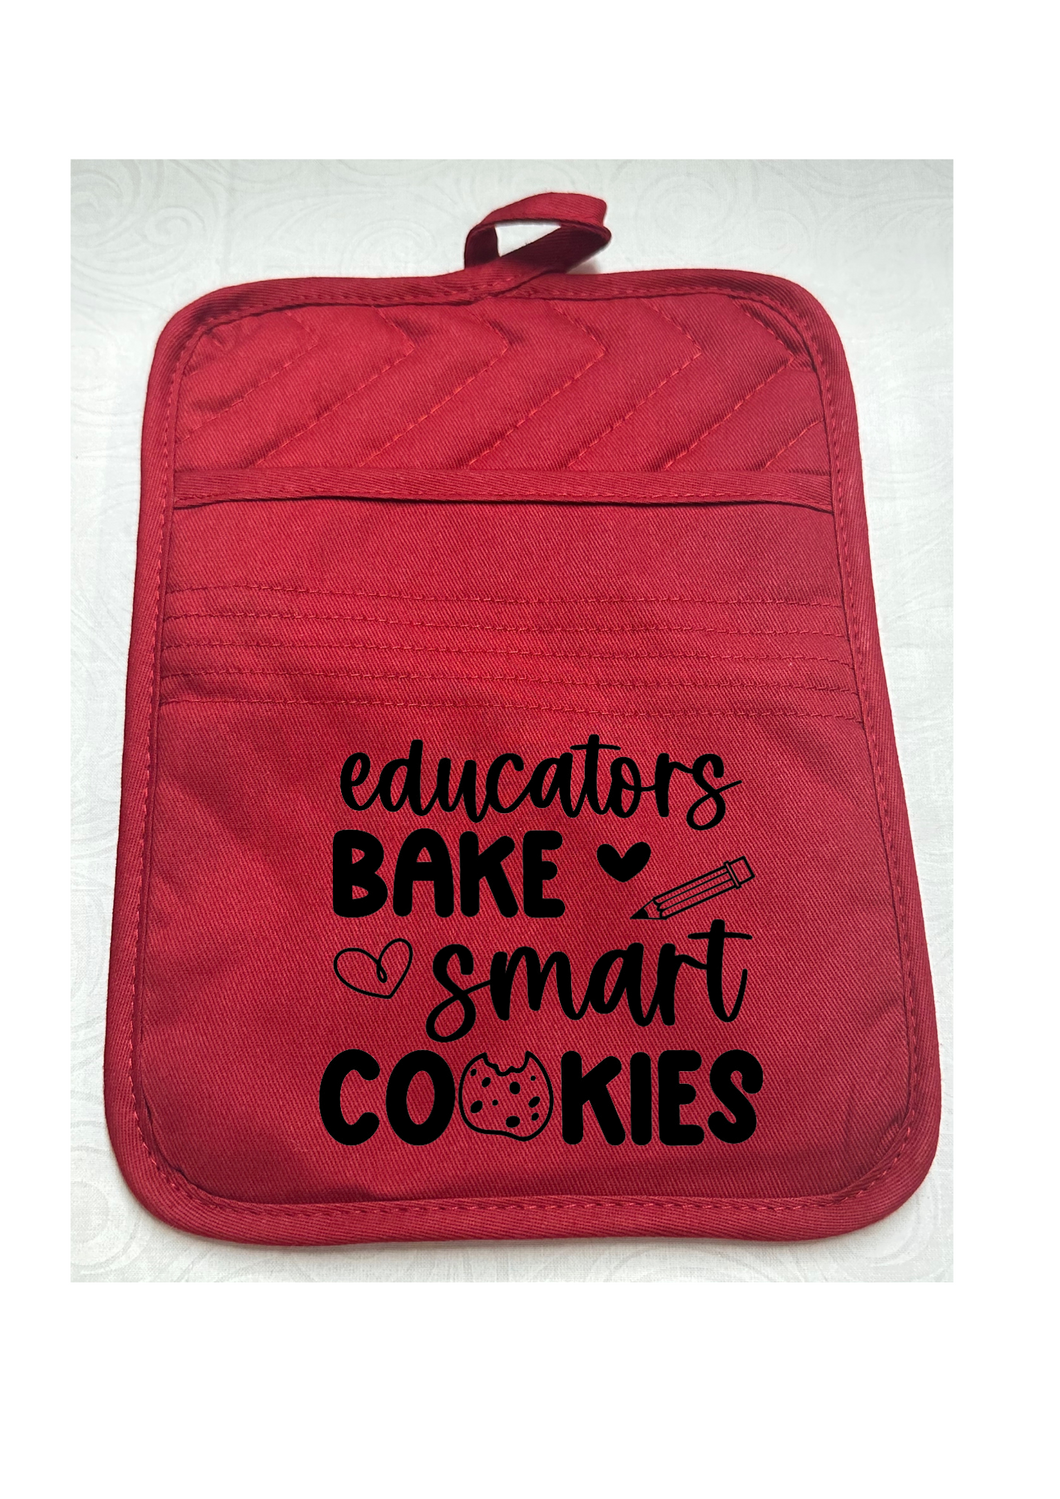 Educators bake smart cookies